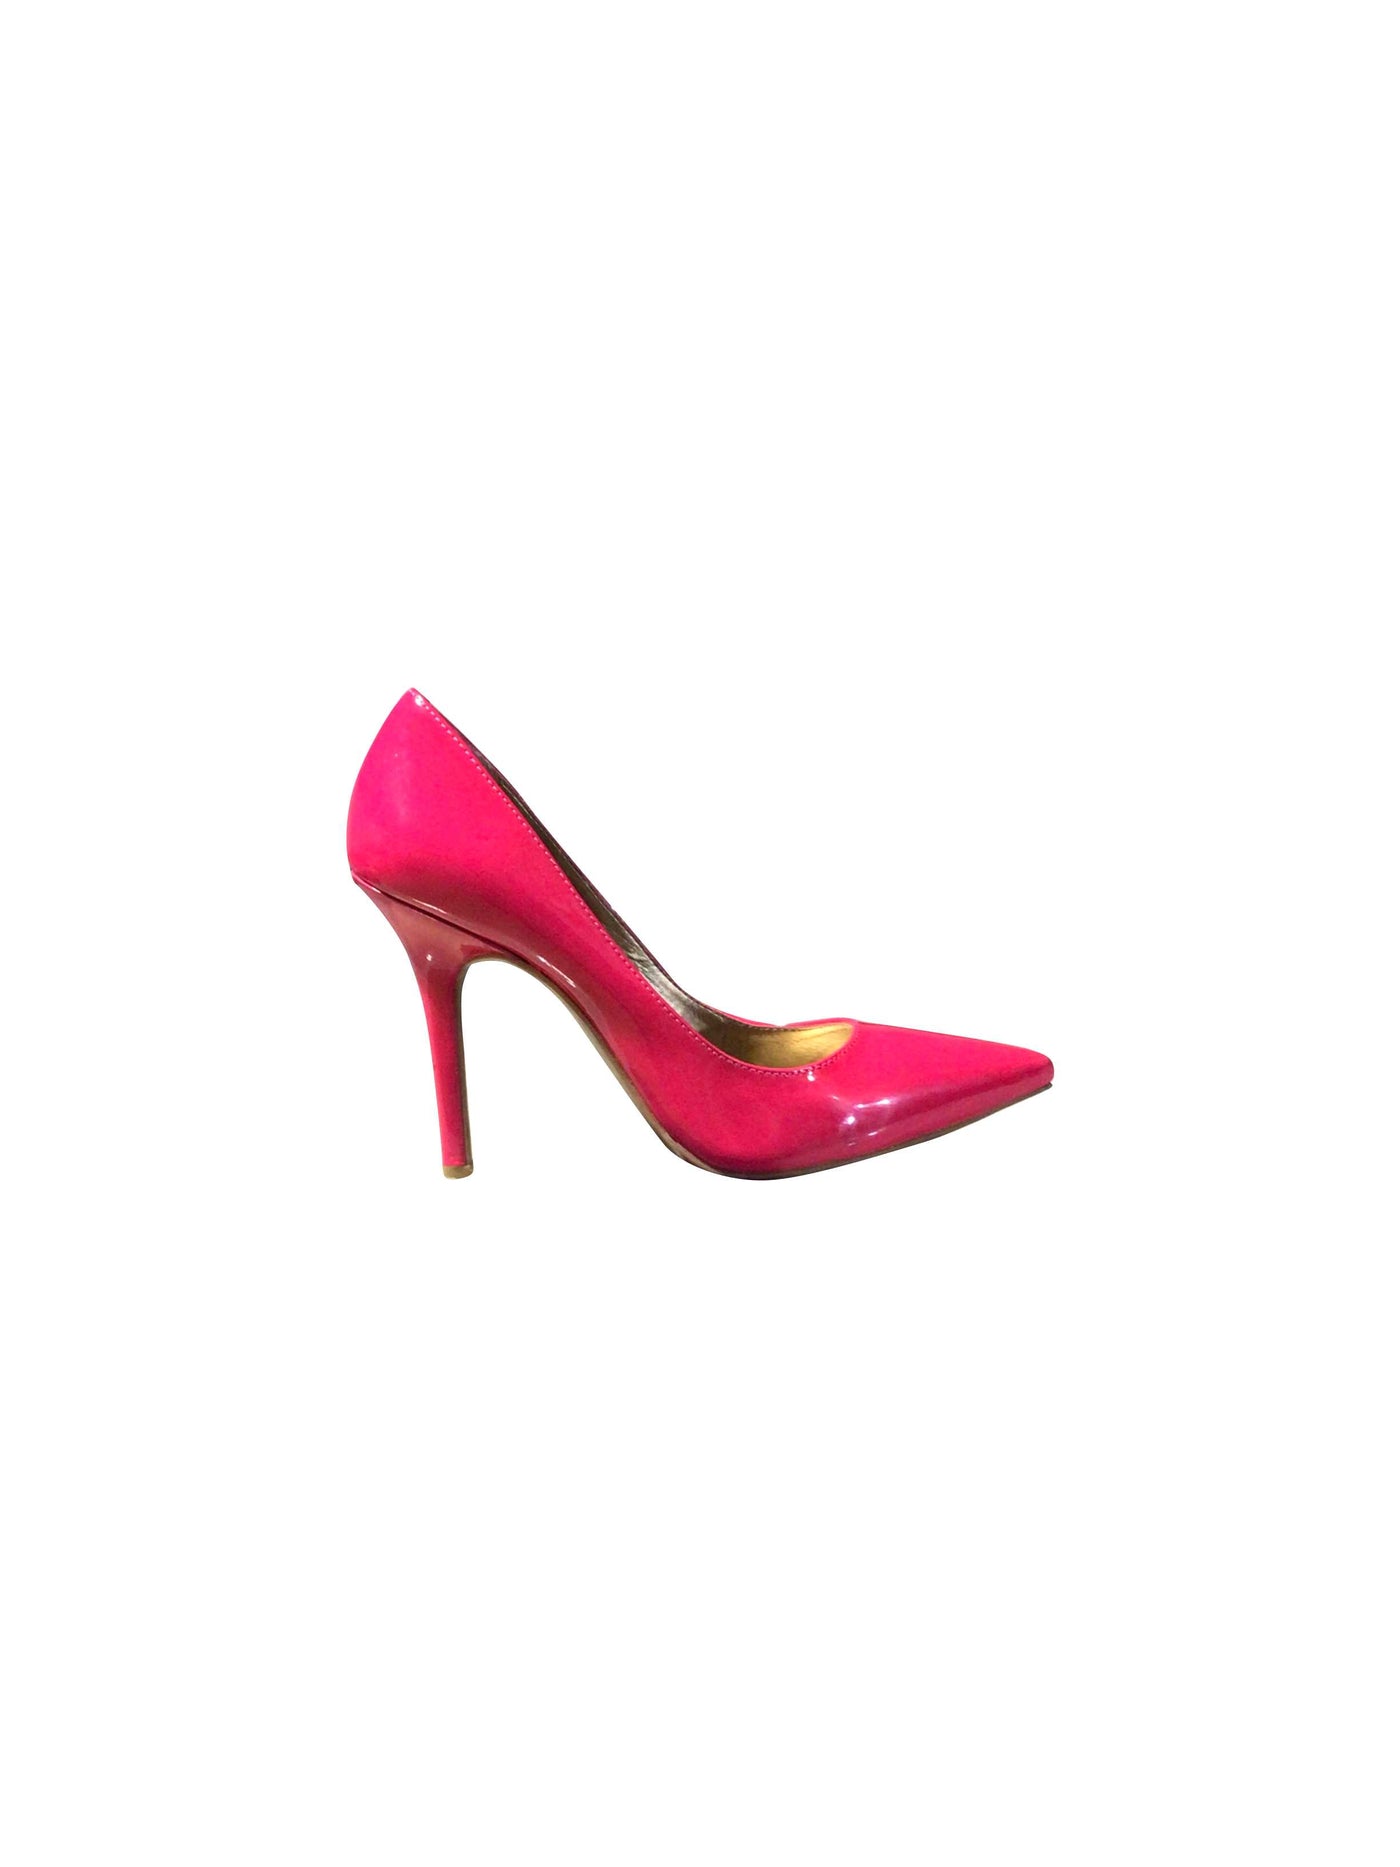 BCBGENERATION High Heels in Pink  -  37  39.95 Koop